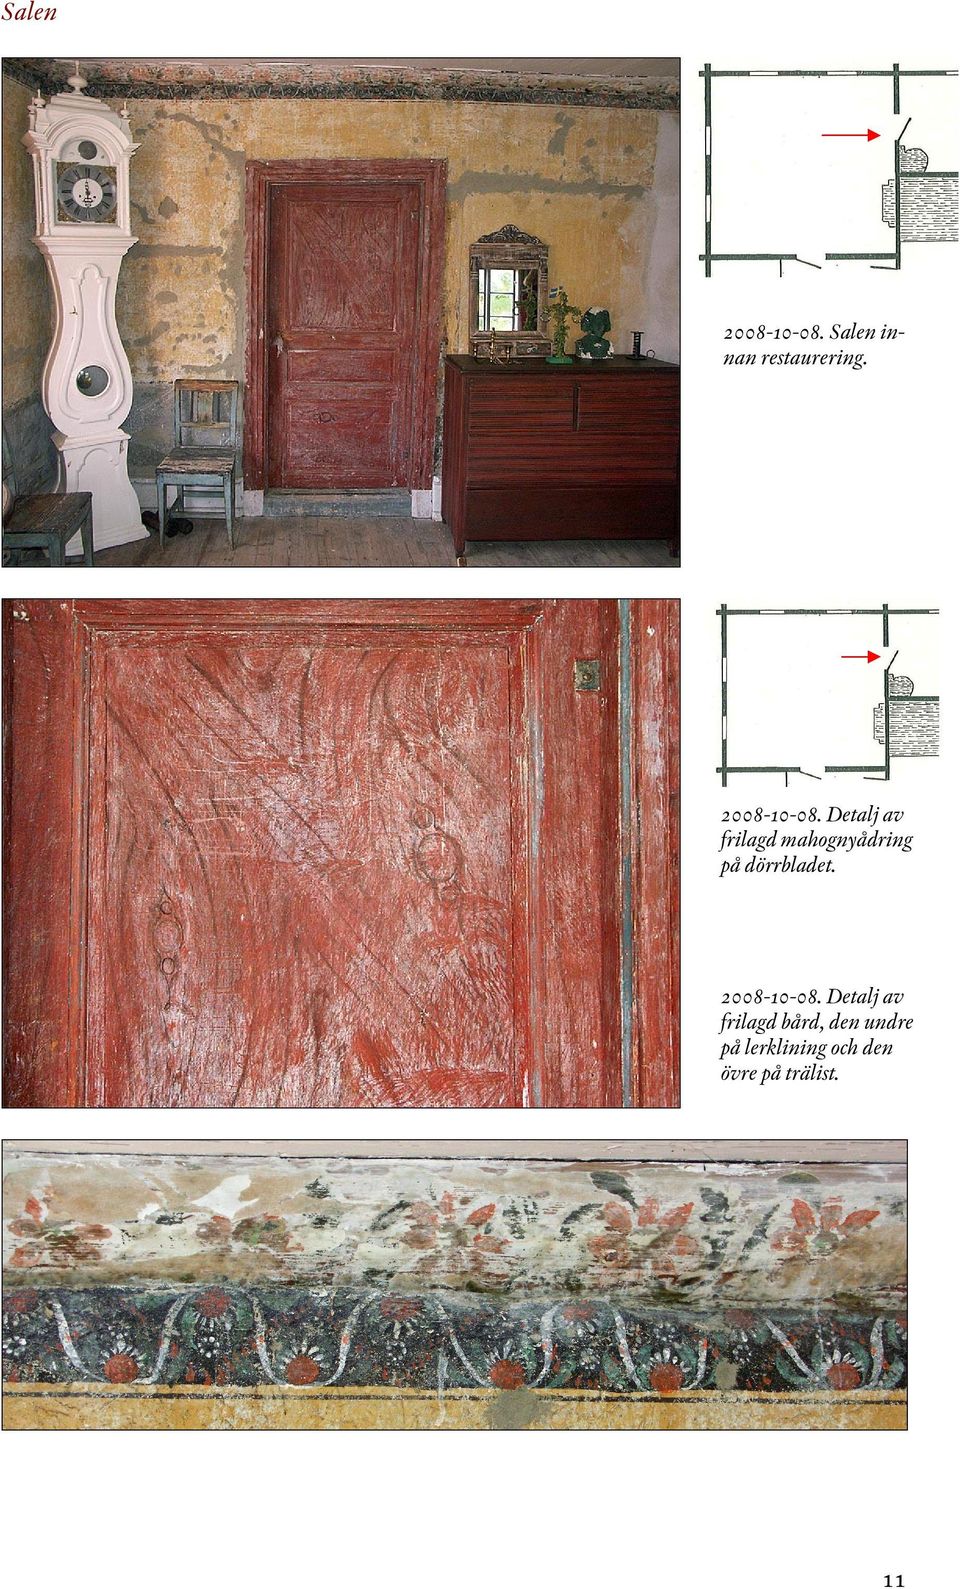 Detalj av frilagd mahognyådring på dörrbladet.